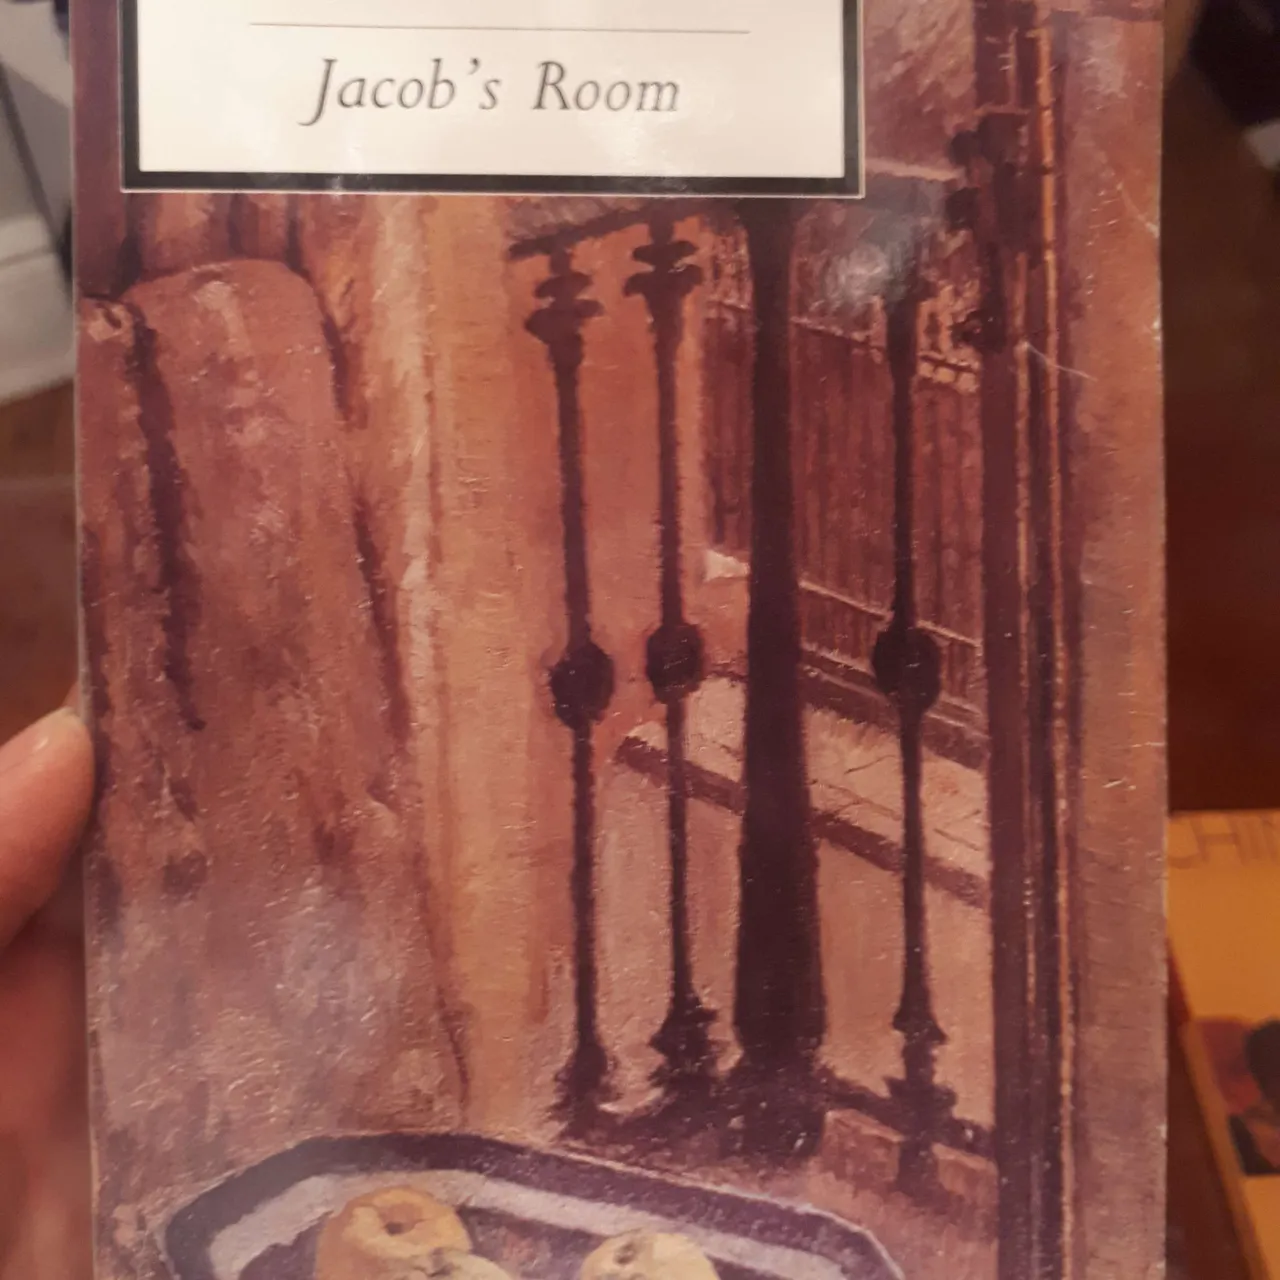 Jacob's Room by Virgina Woolf photo 1